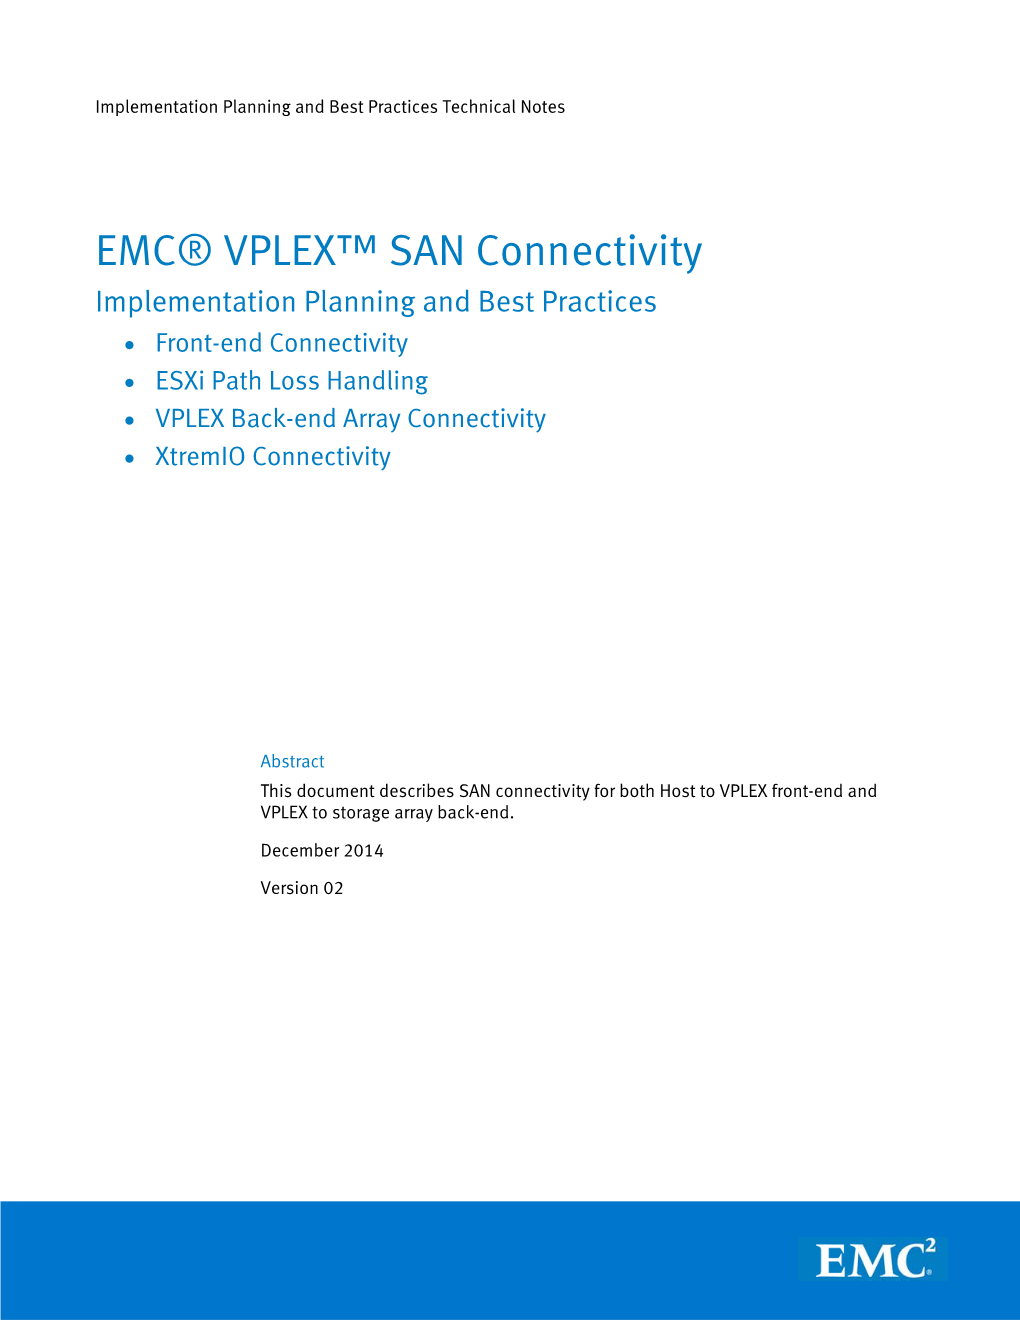 EMC VPLEX SAN Connectivity: Implementation Planning and Best